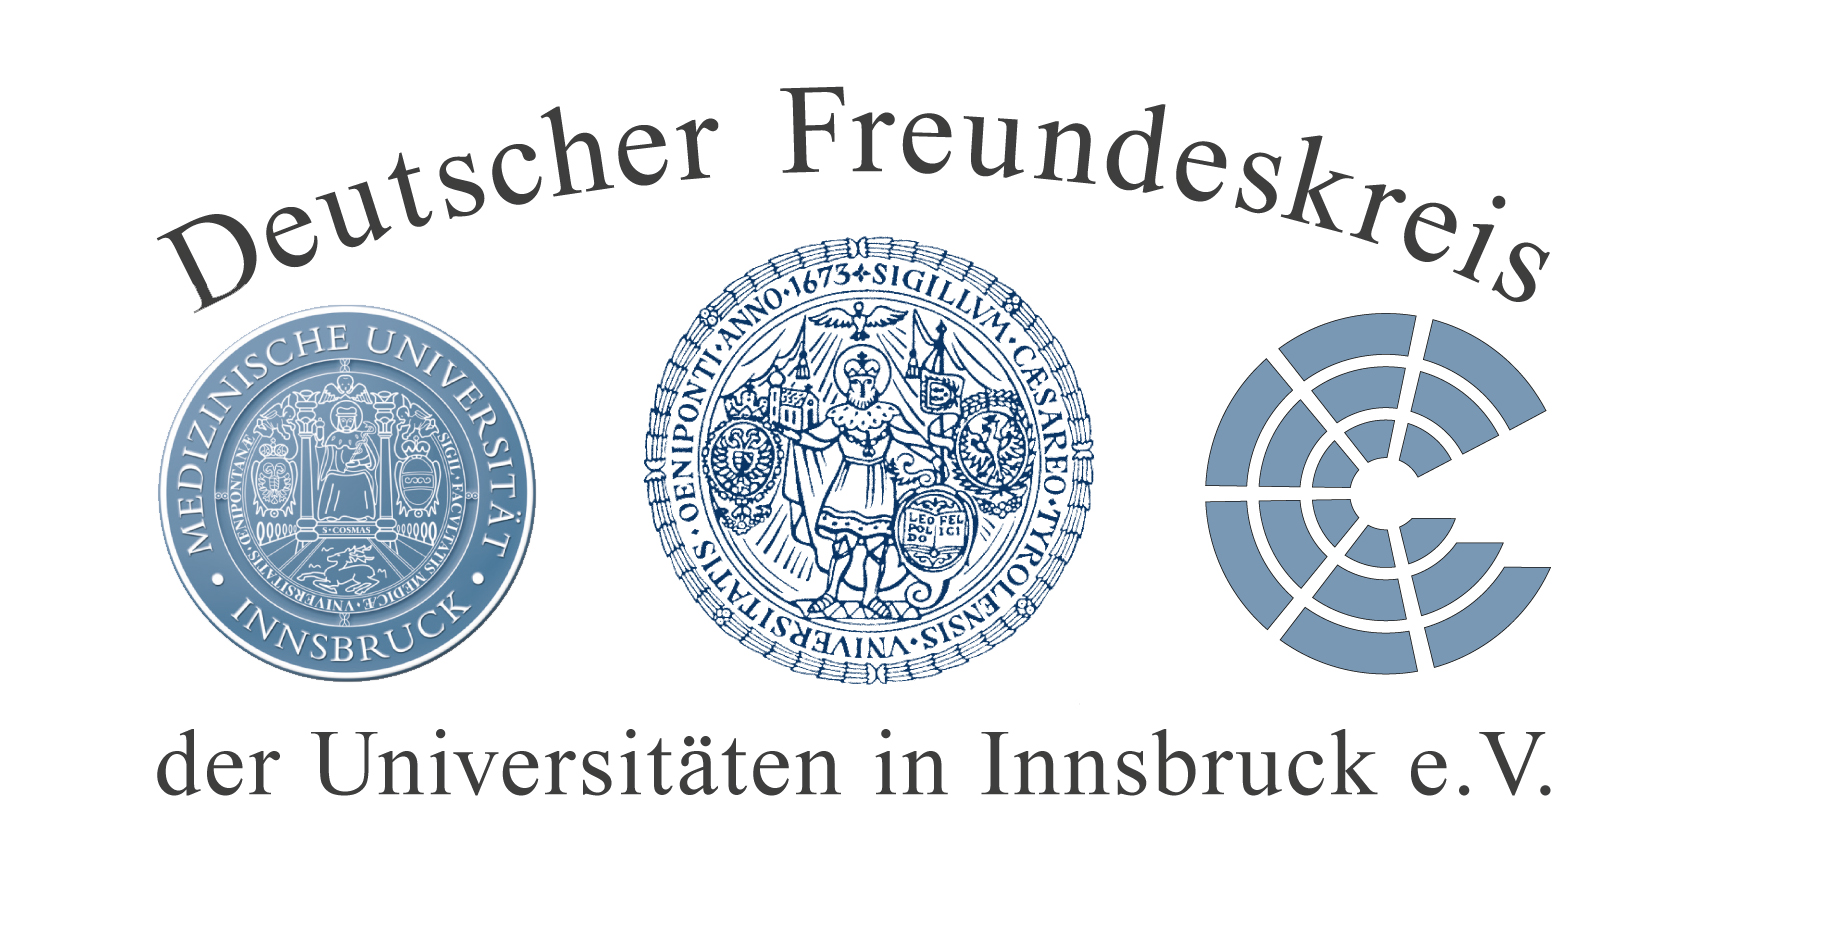 Deutscher Freundeskreis Innsbruck